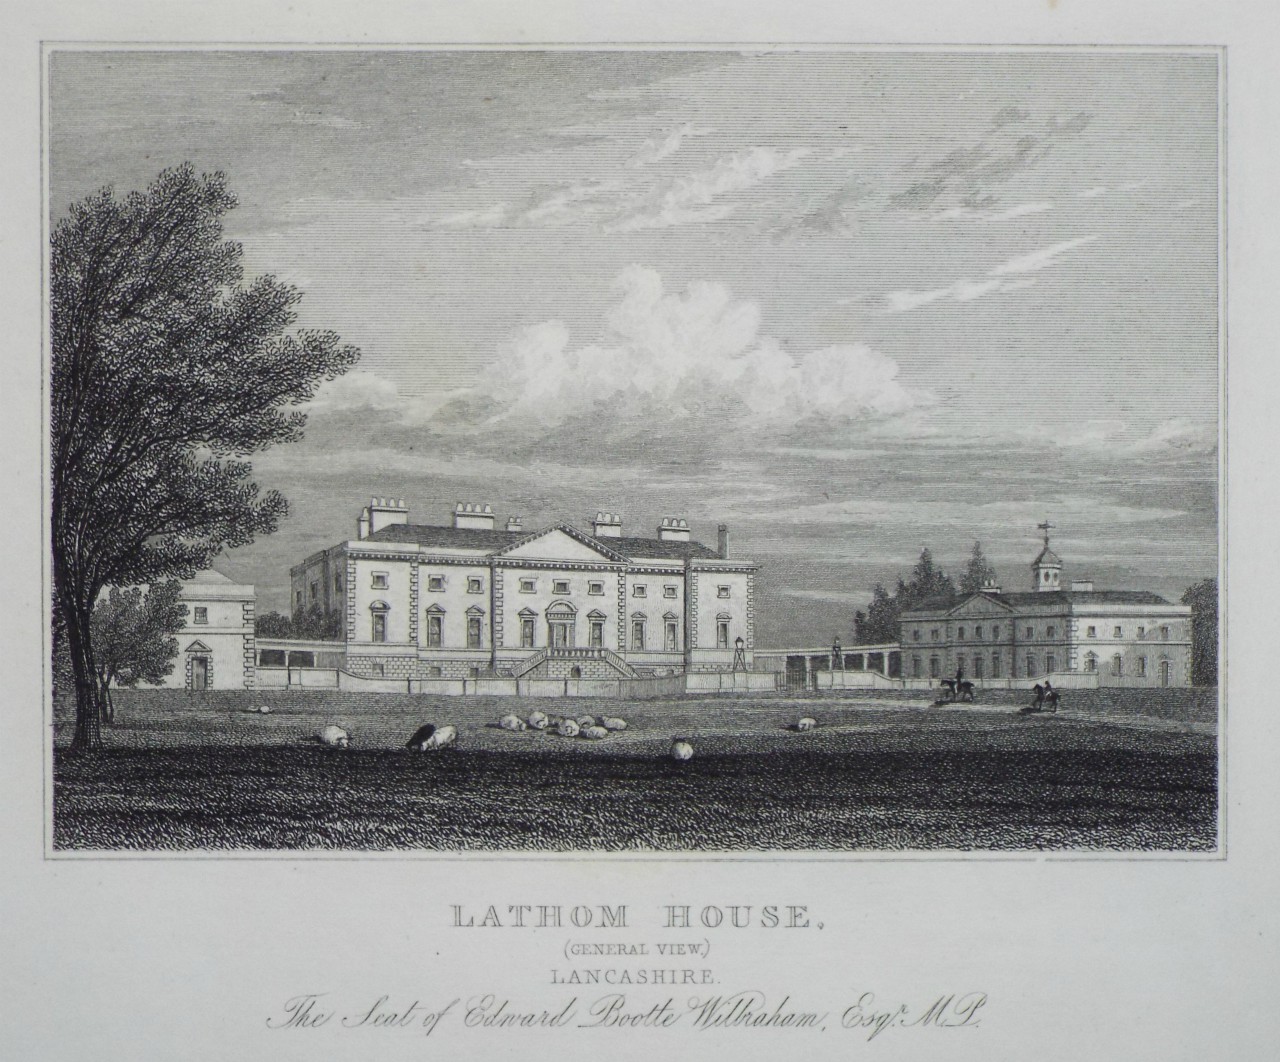 Print - Lathom House, (General View) Lancashire. The Seat of Edward Bootle Wilbraham, Esqr. M.P. - Radclyffe